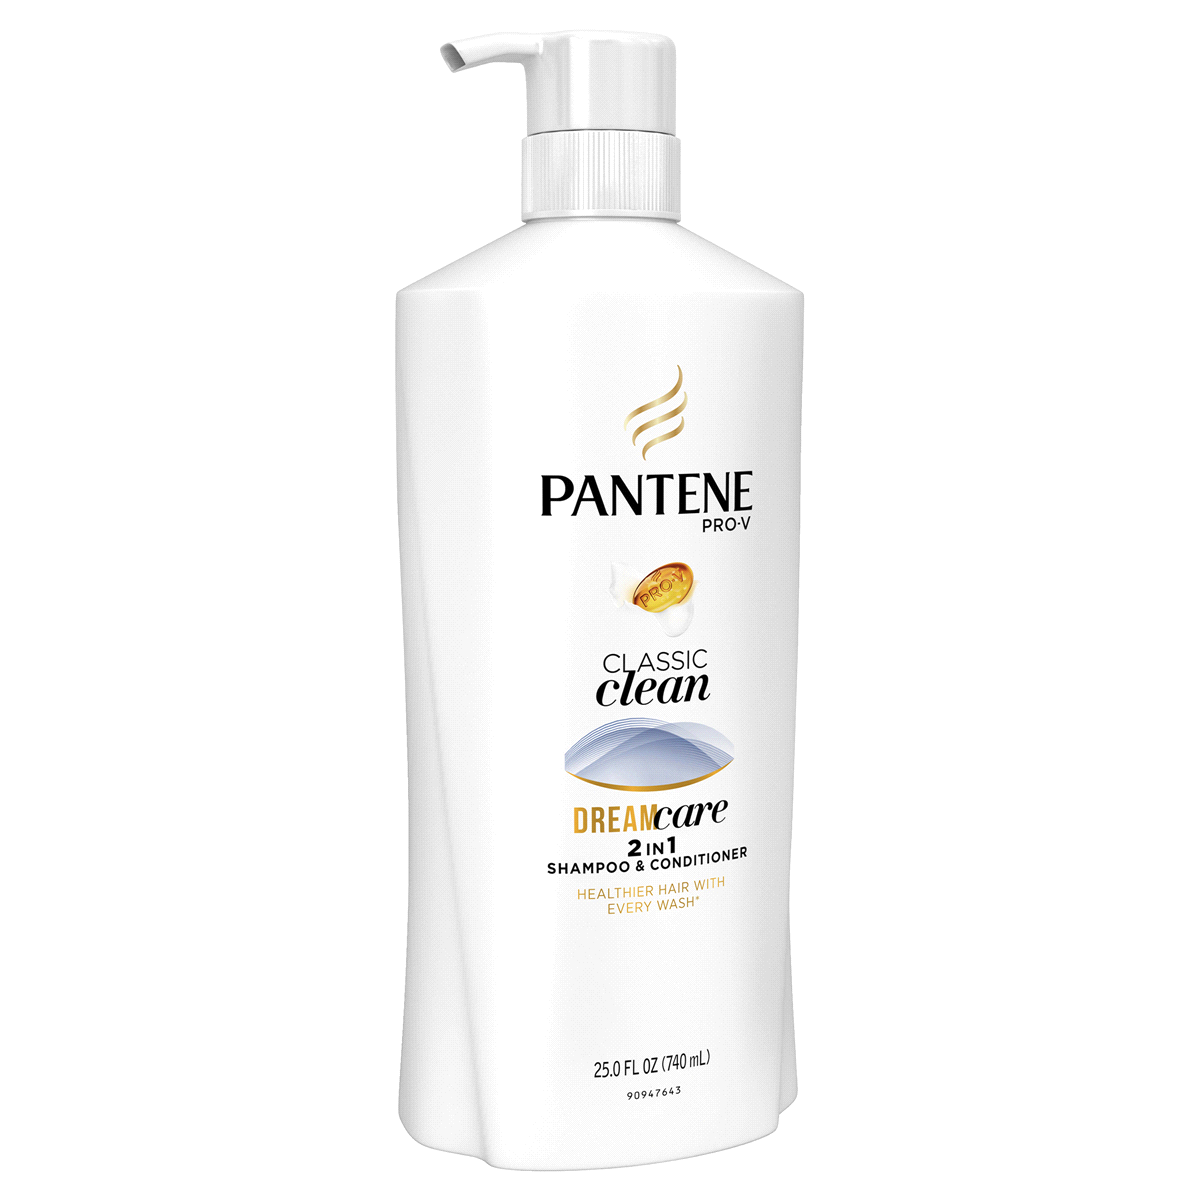 slide 2 of 5, Pantene Pro-V Classic Clean Dream Care 2 in 1 Shampoo and Conditioner, 25 fl oz